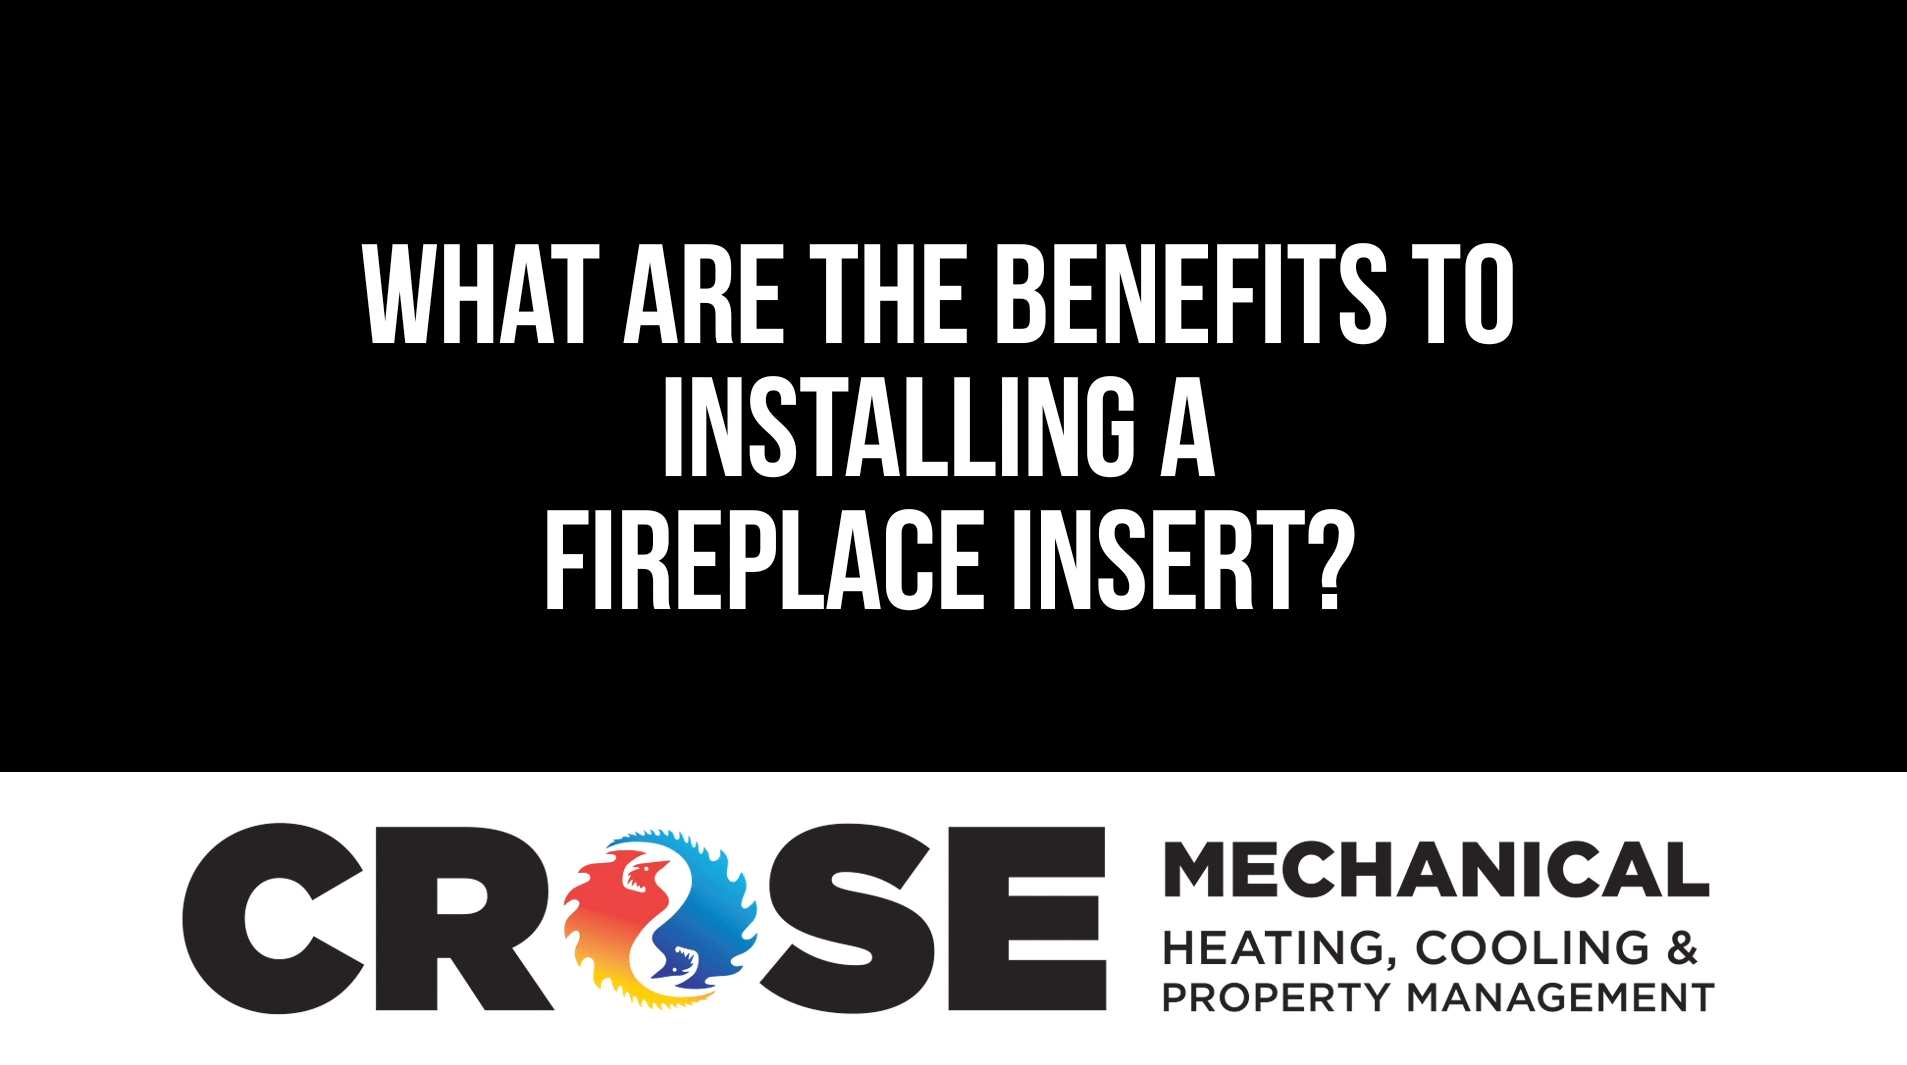 fireplace insert benefits vs crose